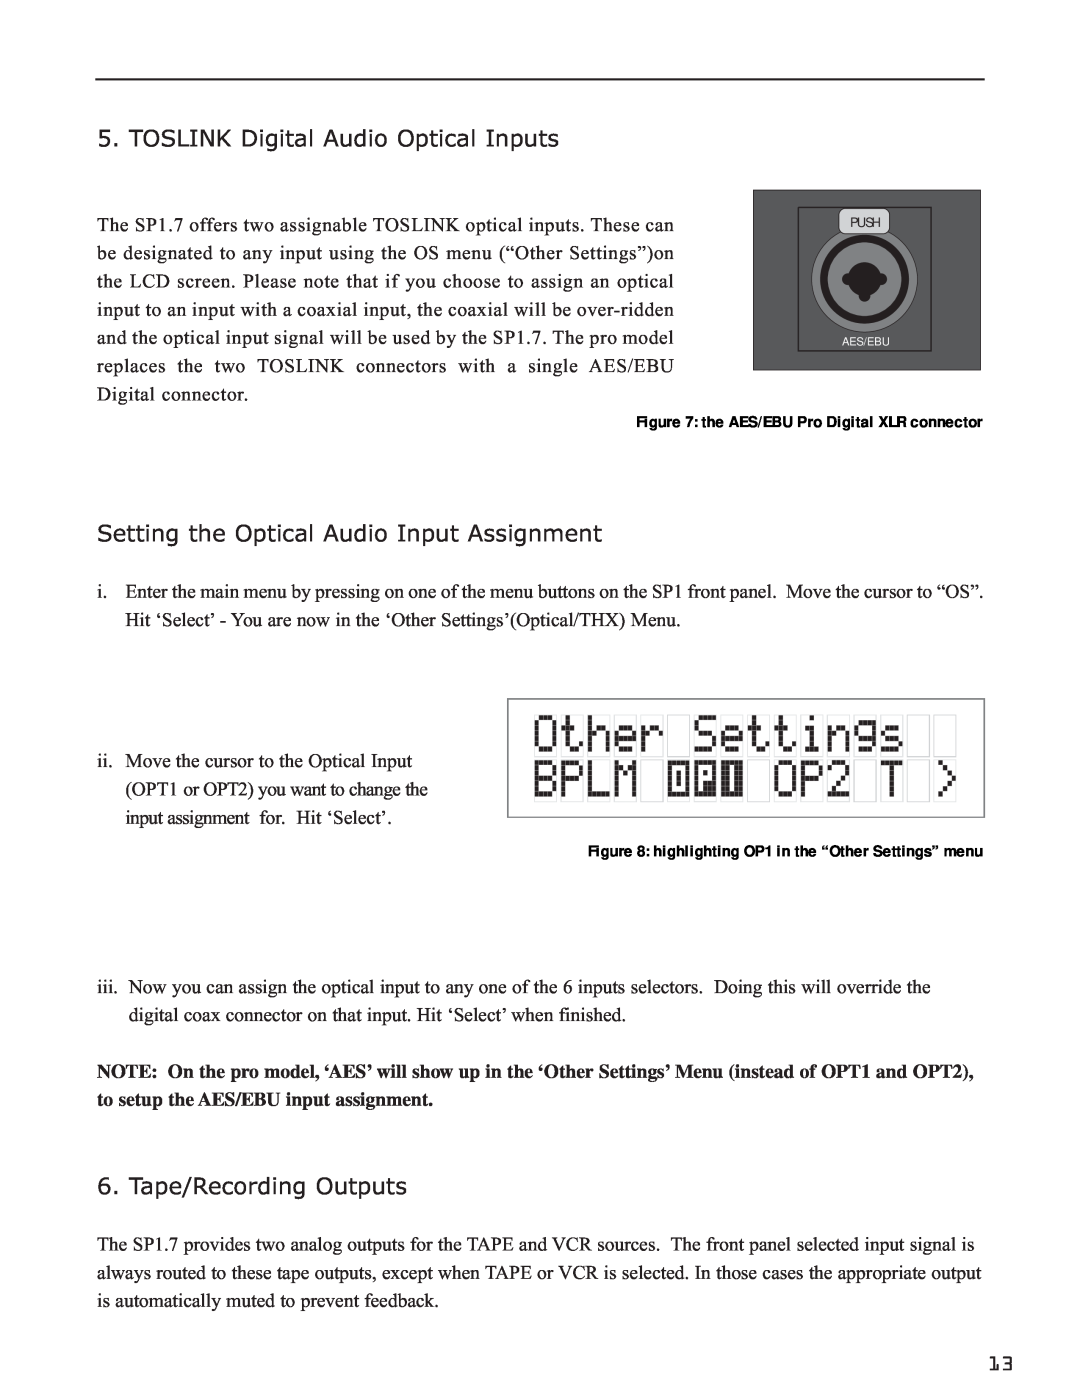 Bryston SP1.7PRECISION manual TOSLINK Digital Audio Optical Inputs, Setting the Optical Audio Input Assignment 